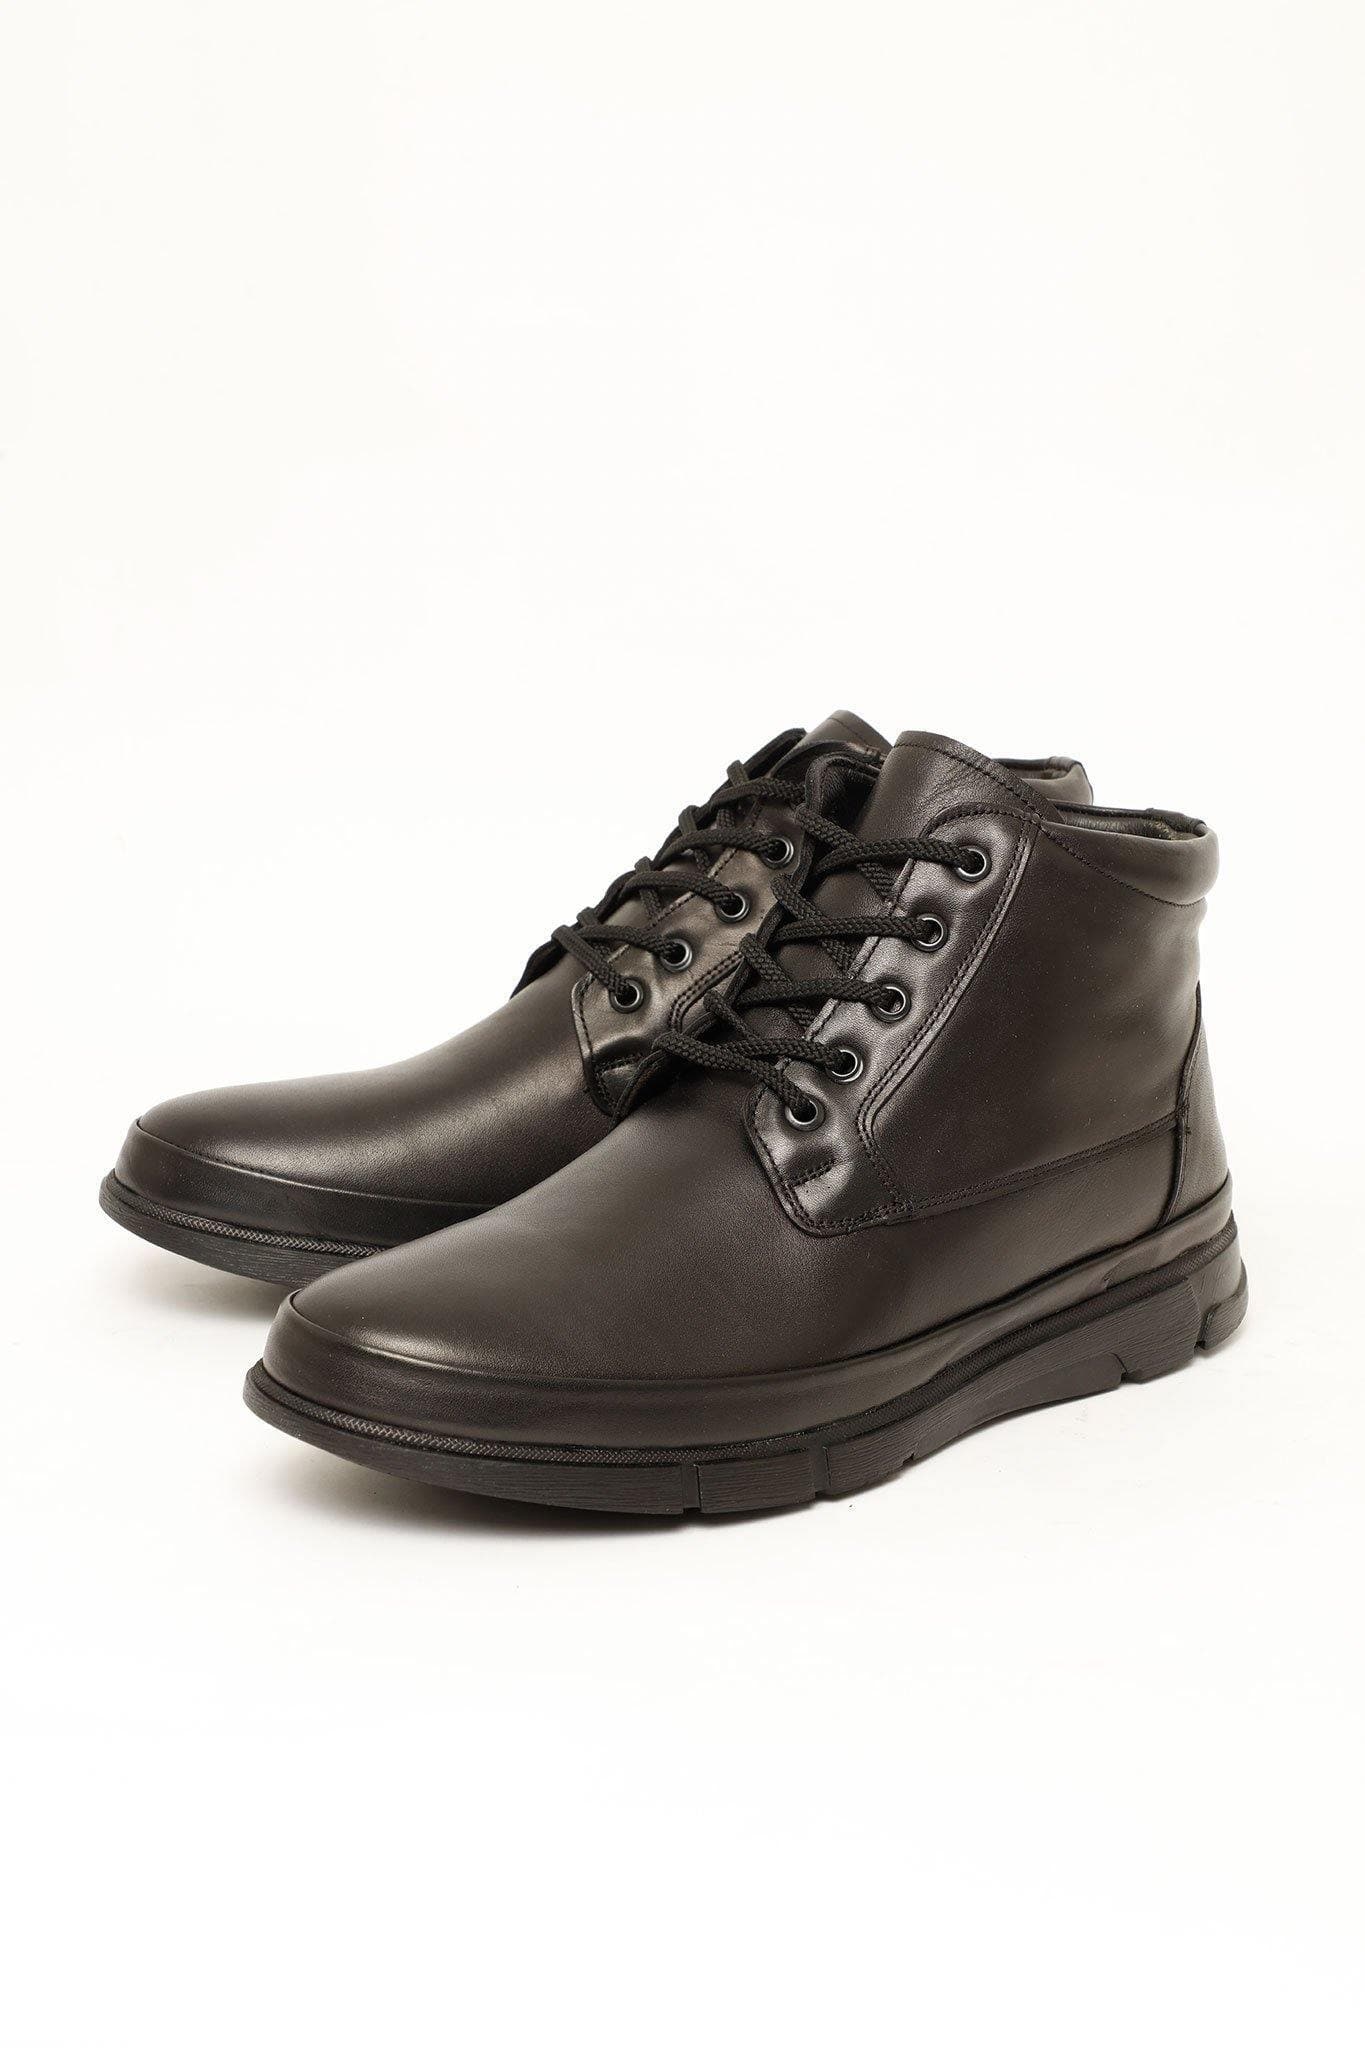 PB MARLO MEN'S ANKLE BOOTS 4096BLK, SHOE, CORADO, black, boots, leather, men, shoe, coradomoda, coradomoda.com